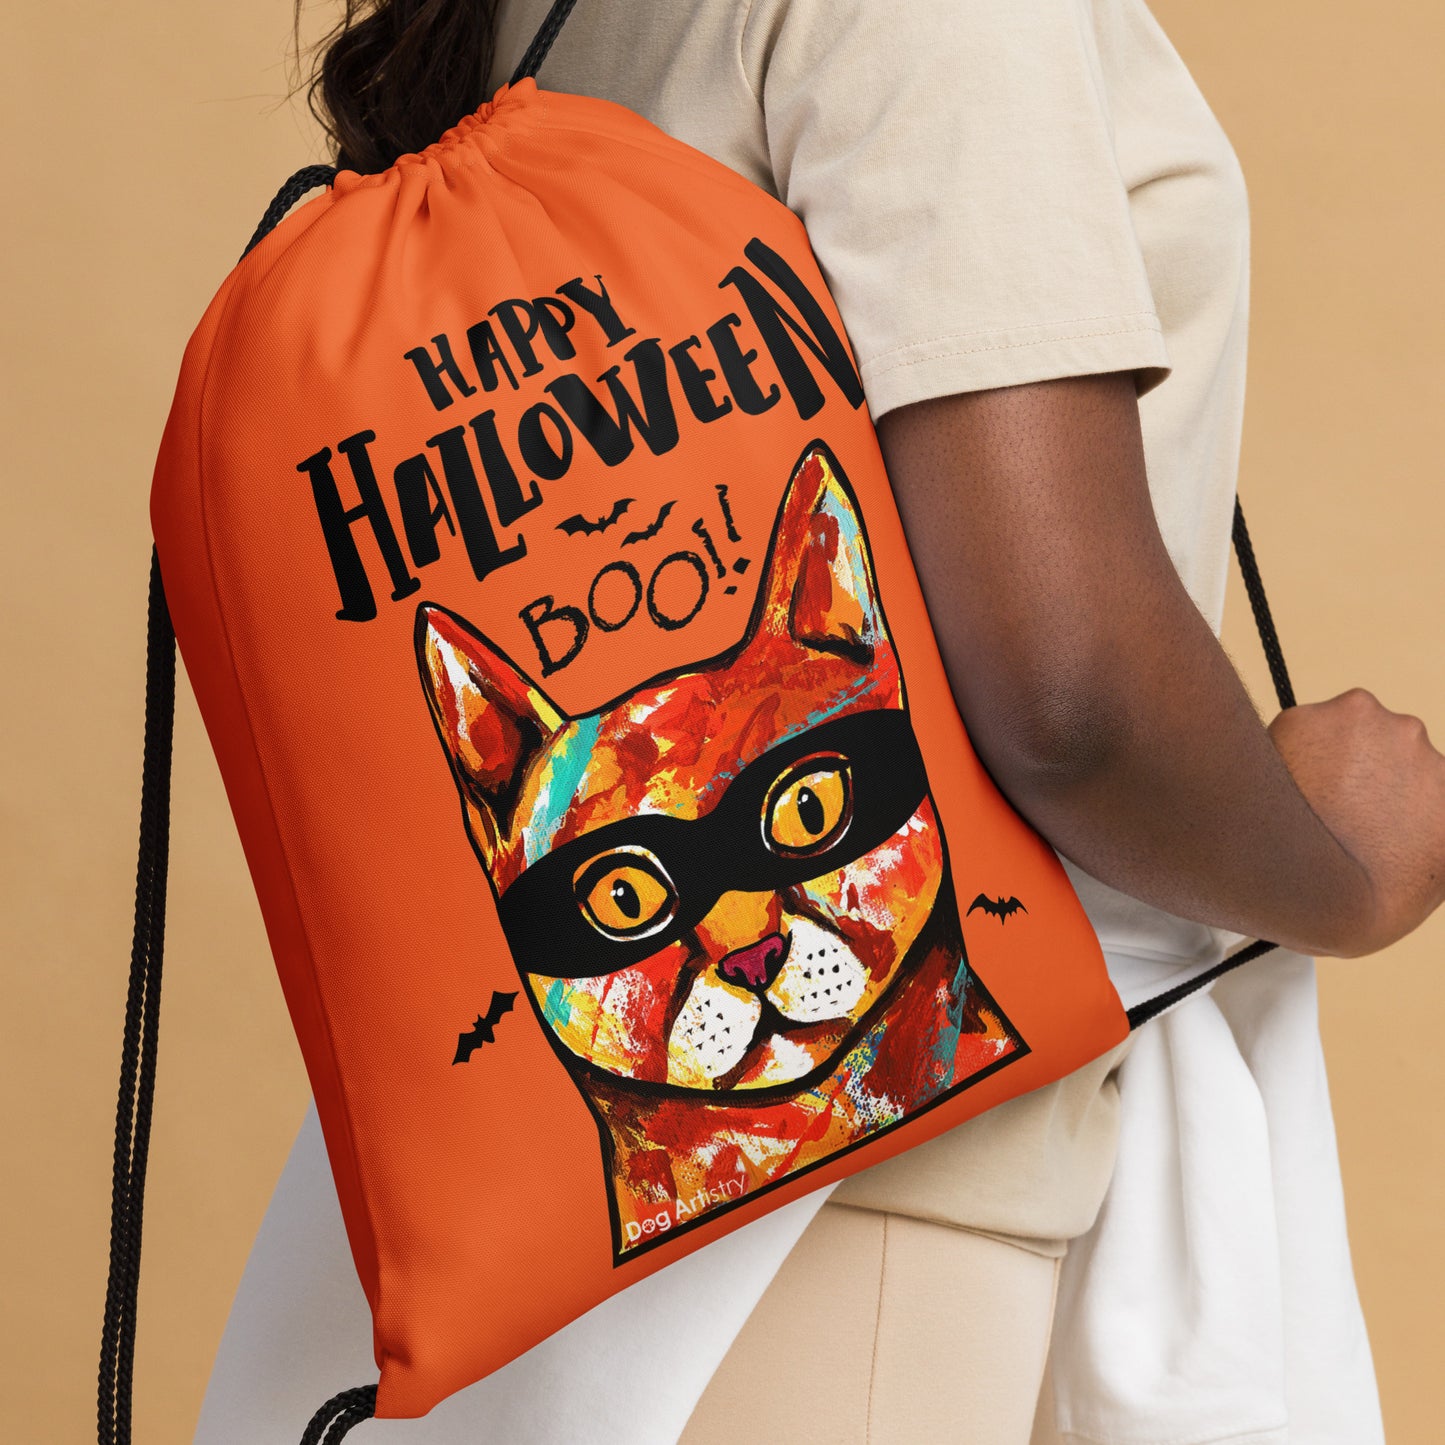 Happy Halloween Cat wearing mask Orange drawstring bag by Dog Artistry Halloween candy bag. Close up.